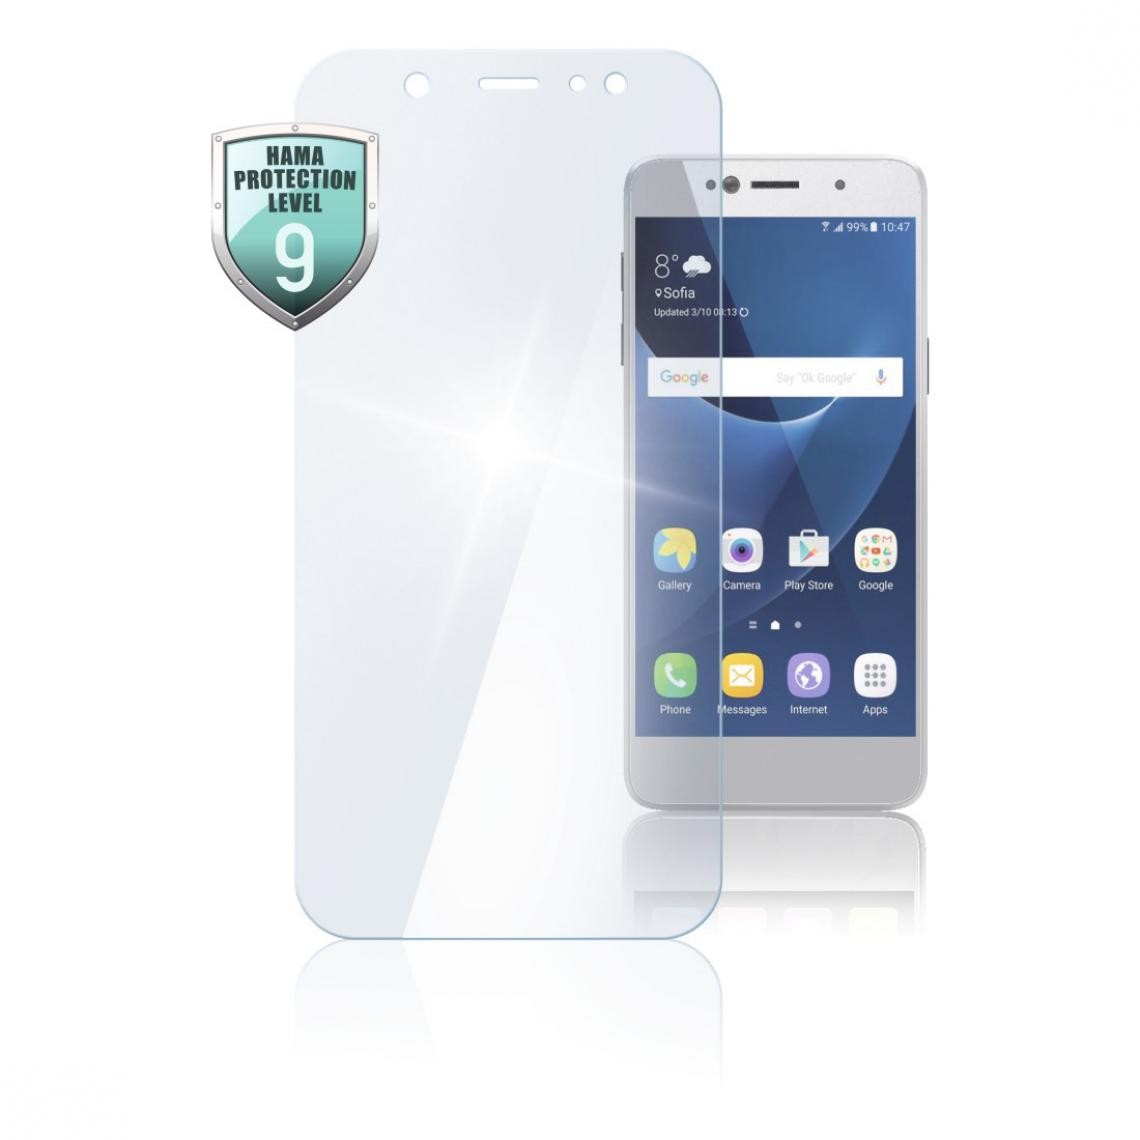 Hama - Protection d'écran verre véritable "Premium Crystal Glass" pour Samsung Galaxy A90 5G - Protection écran smartphone